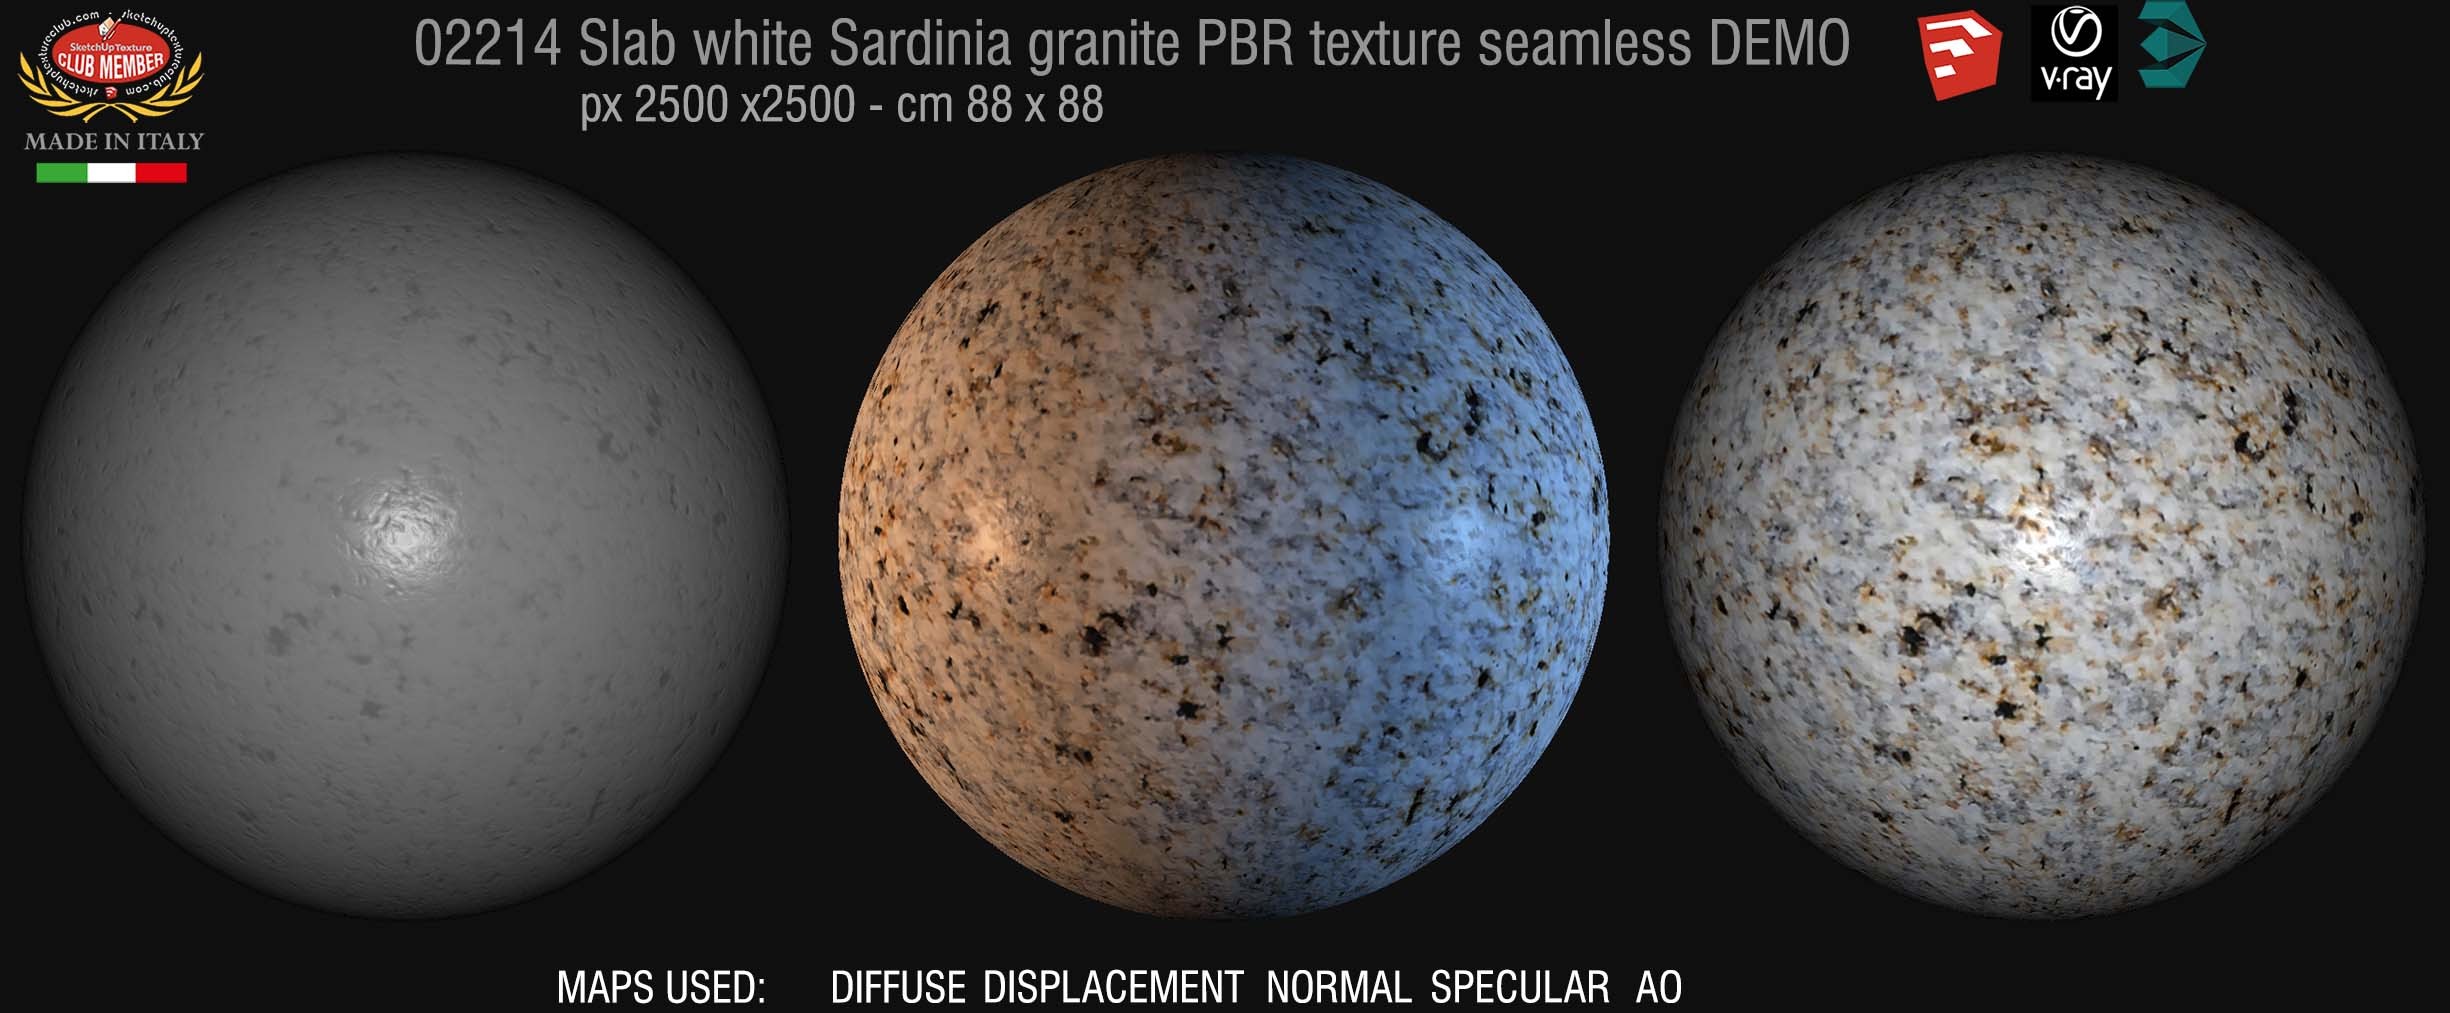 02214 slab white Sardinia granite PBR texture seamless DEMO